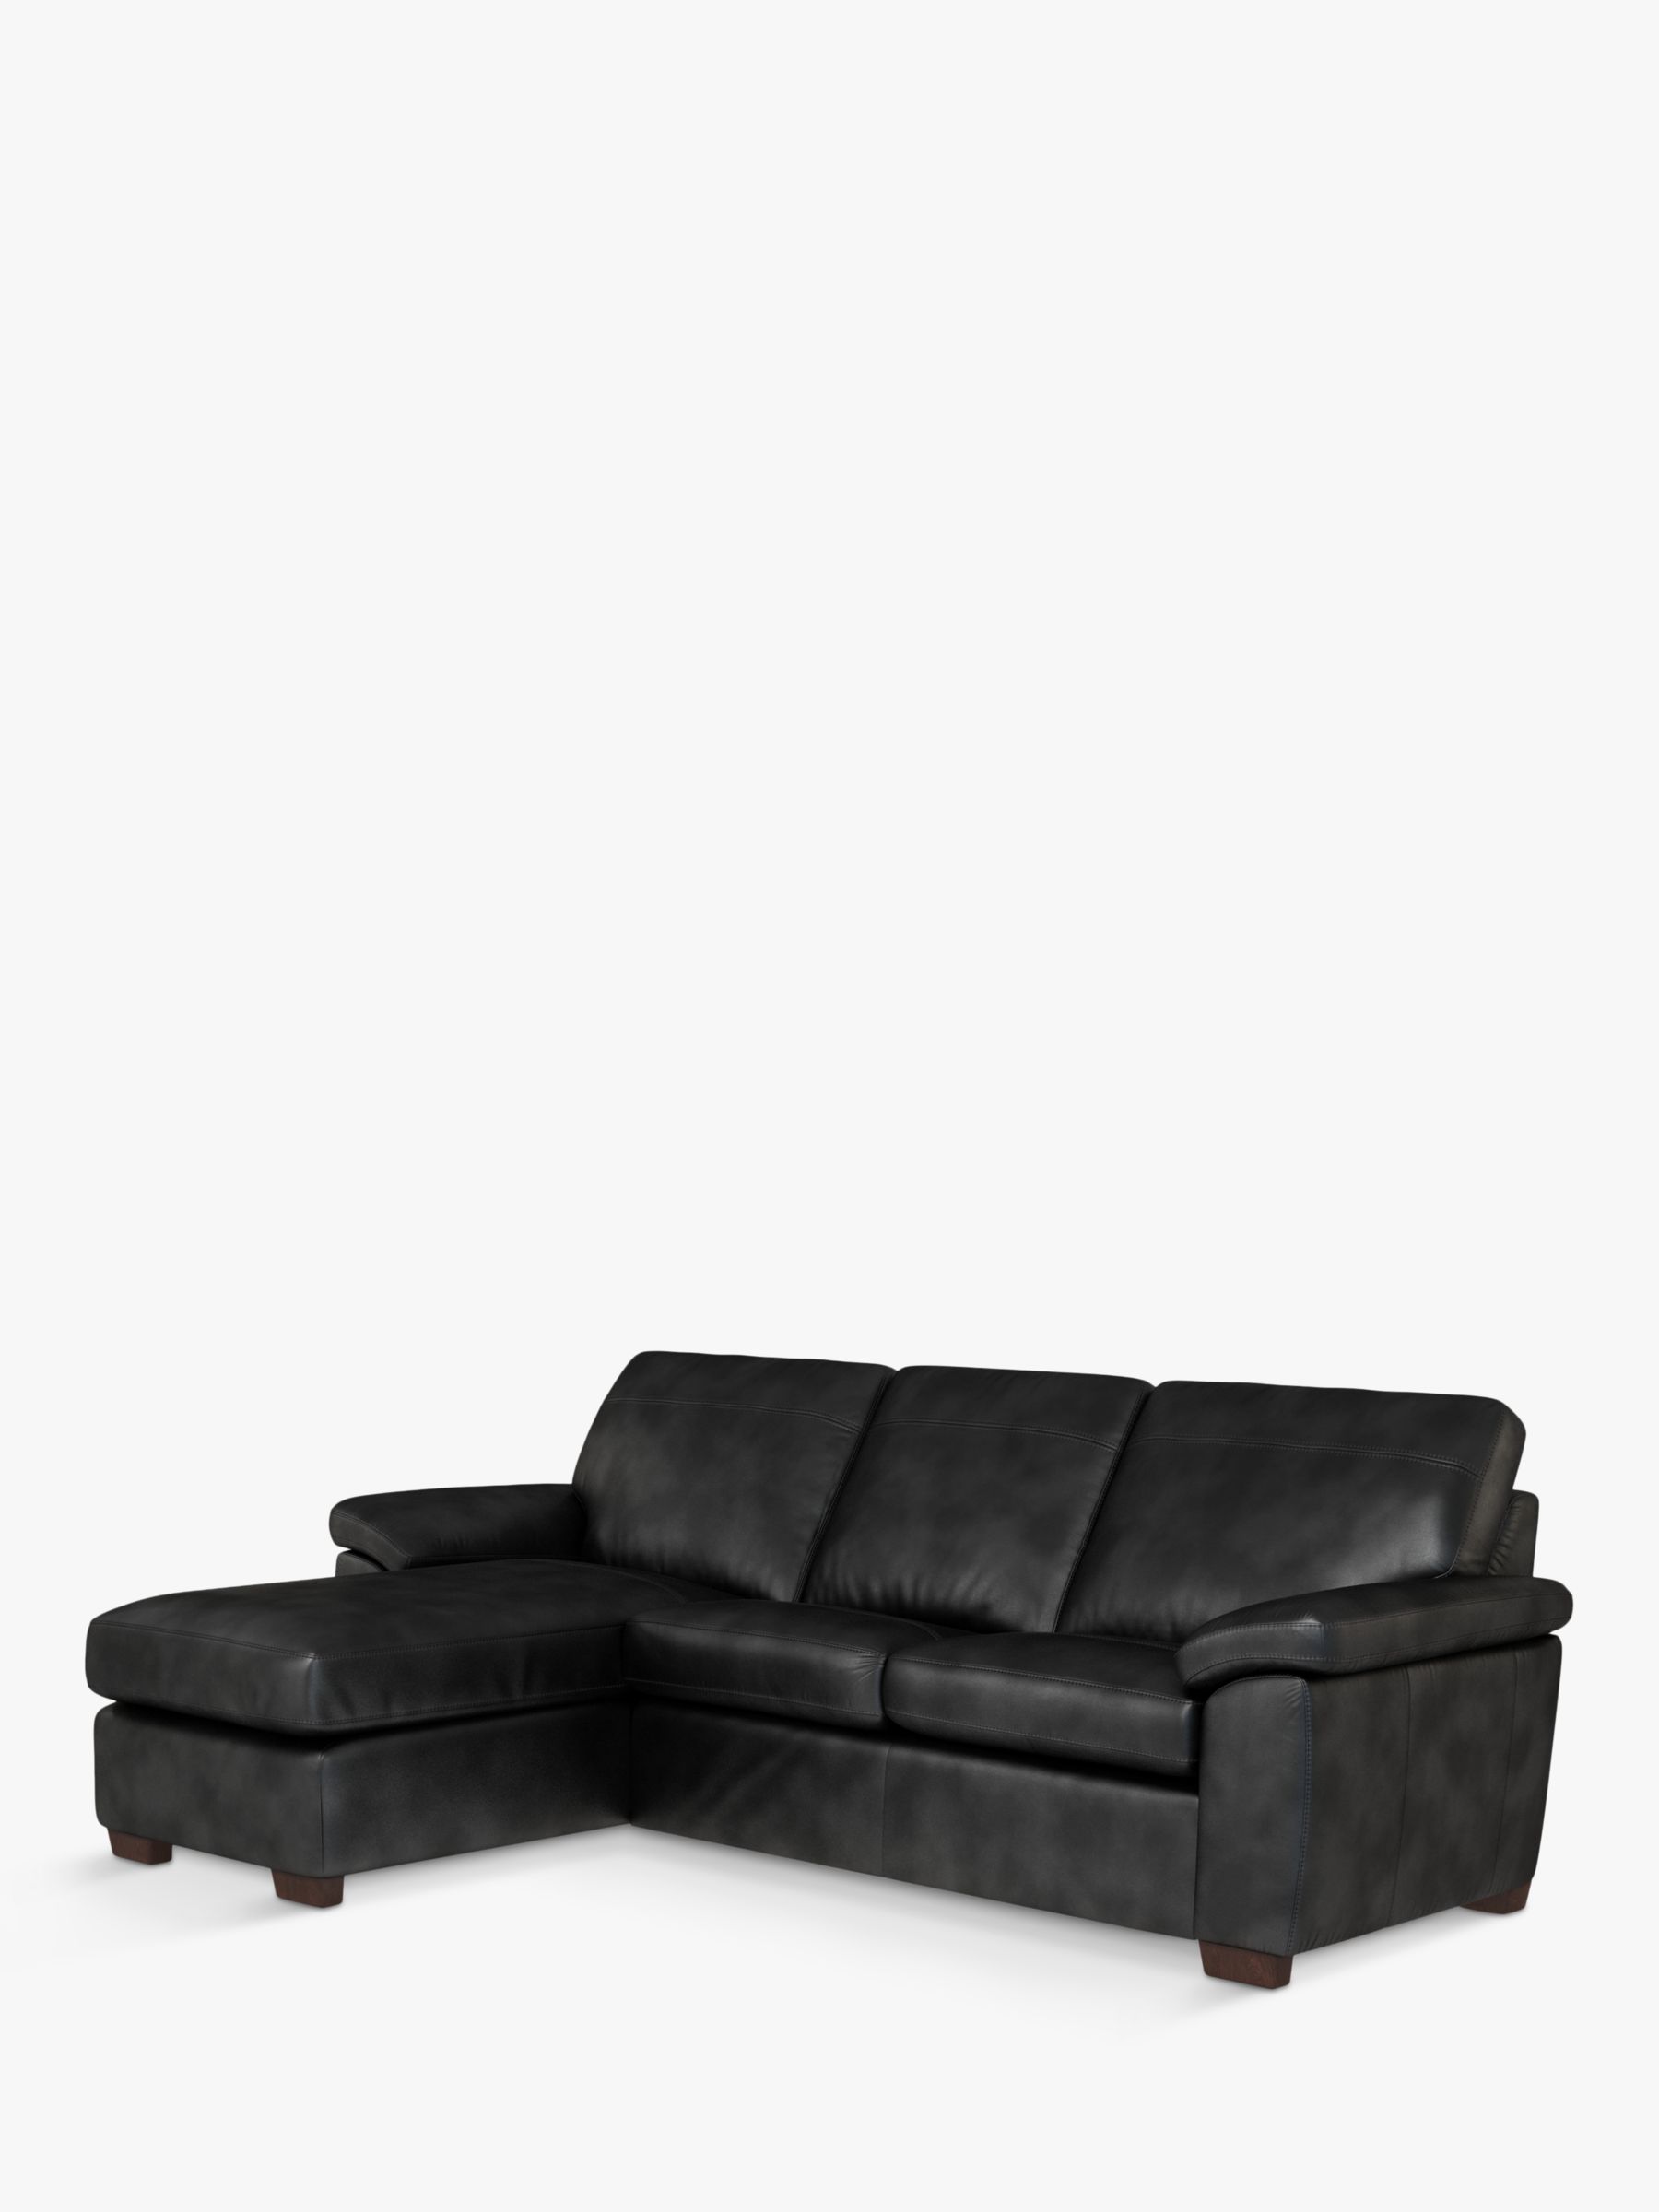 Camden Range, John Lewis Camden LHF Storage Chaise End Leather Sofa Bed, Dark Leg, Contempo Black